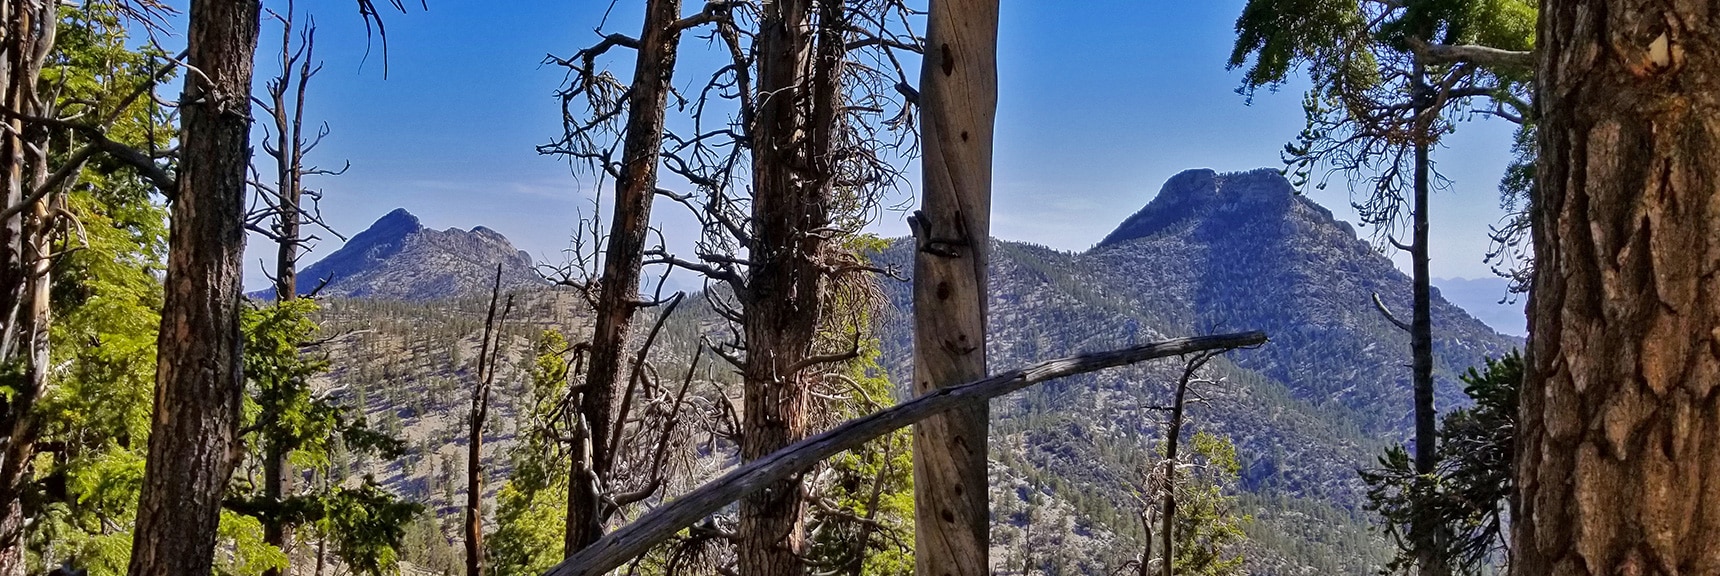 Sisters Peaks Viewed from Bonanza Trail | Base of McFarland Peak via Bristlecone Pine Trail and Bonanza Trail | Lee Canyon | Spring Mountains, Nevada